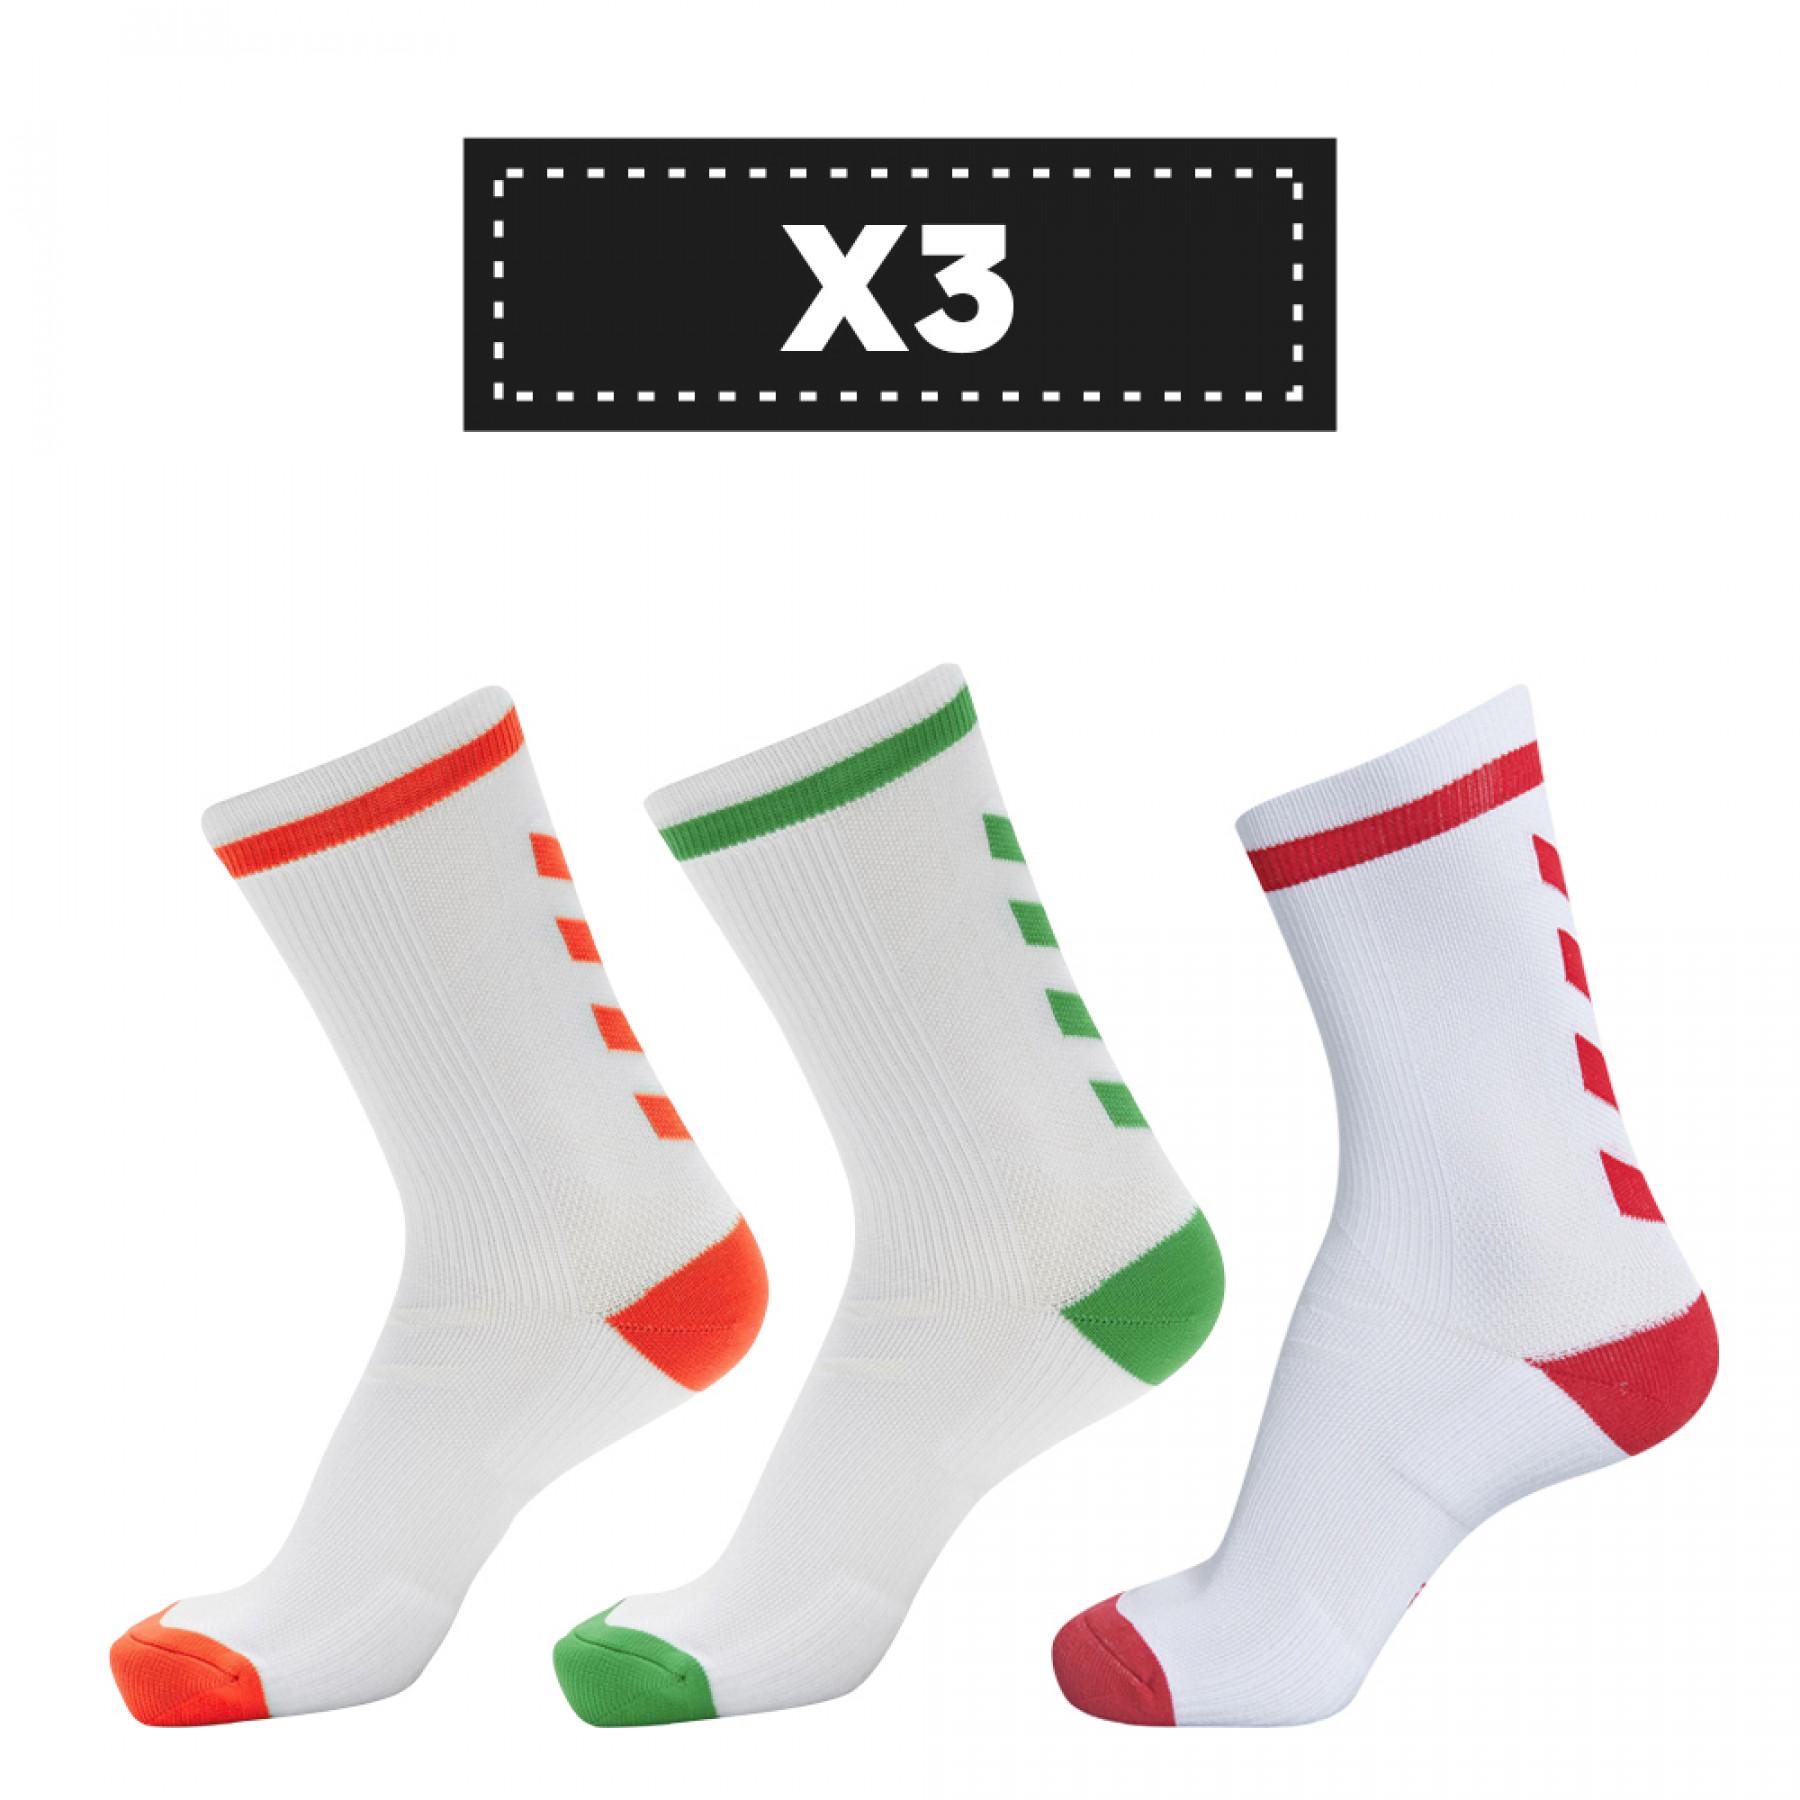 Conjunto de 3 pares de meias coloridas claras Hummel Elite Indoor Low (coloris au choix)